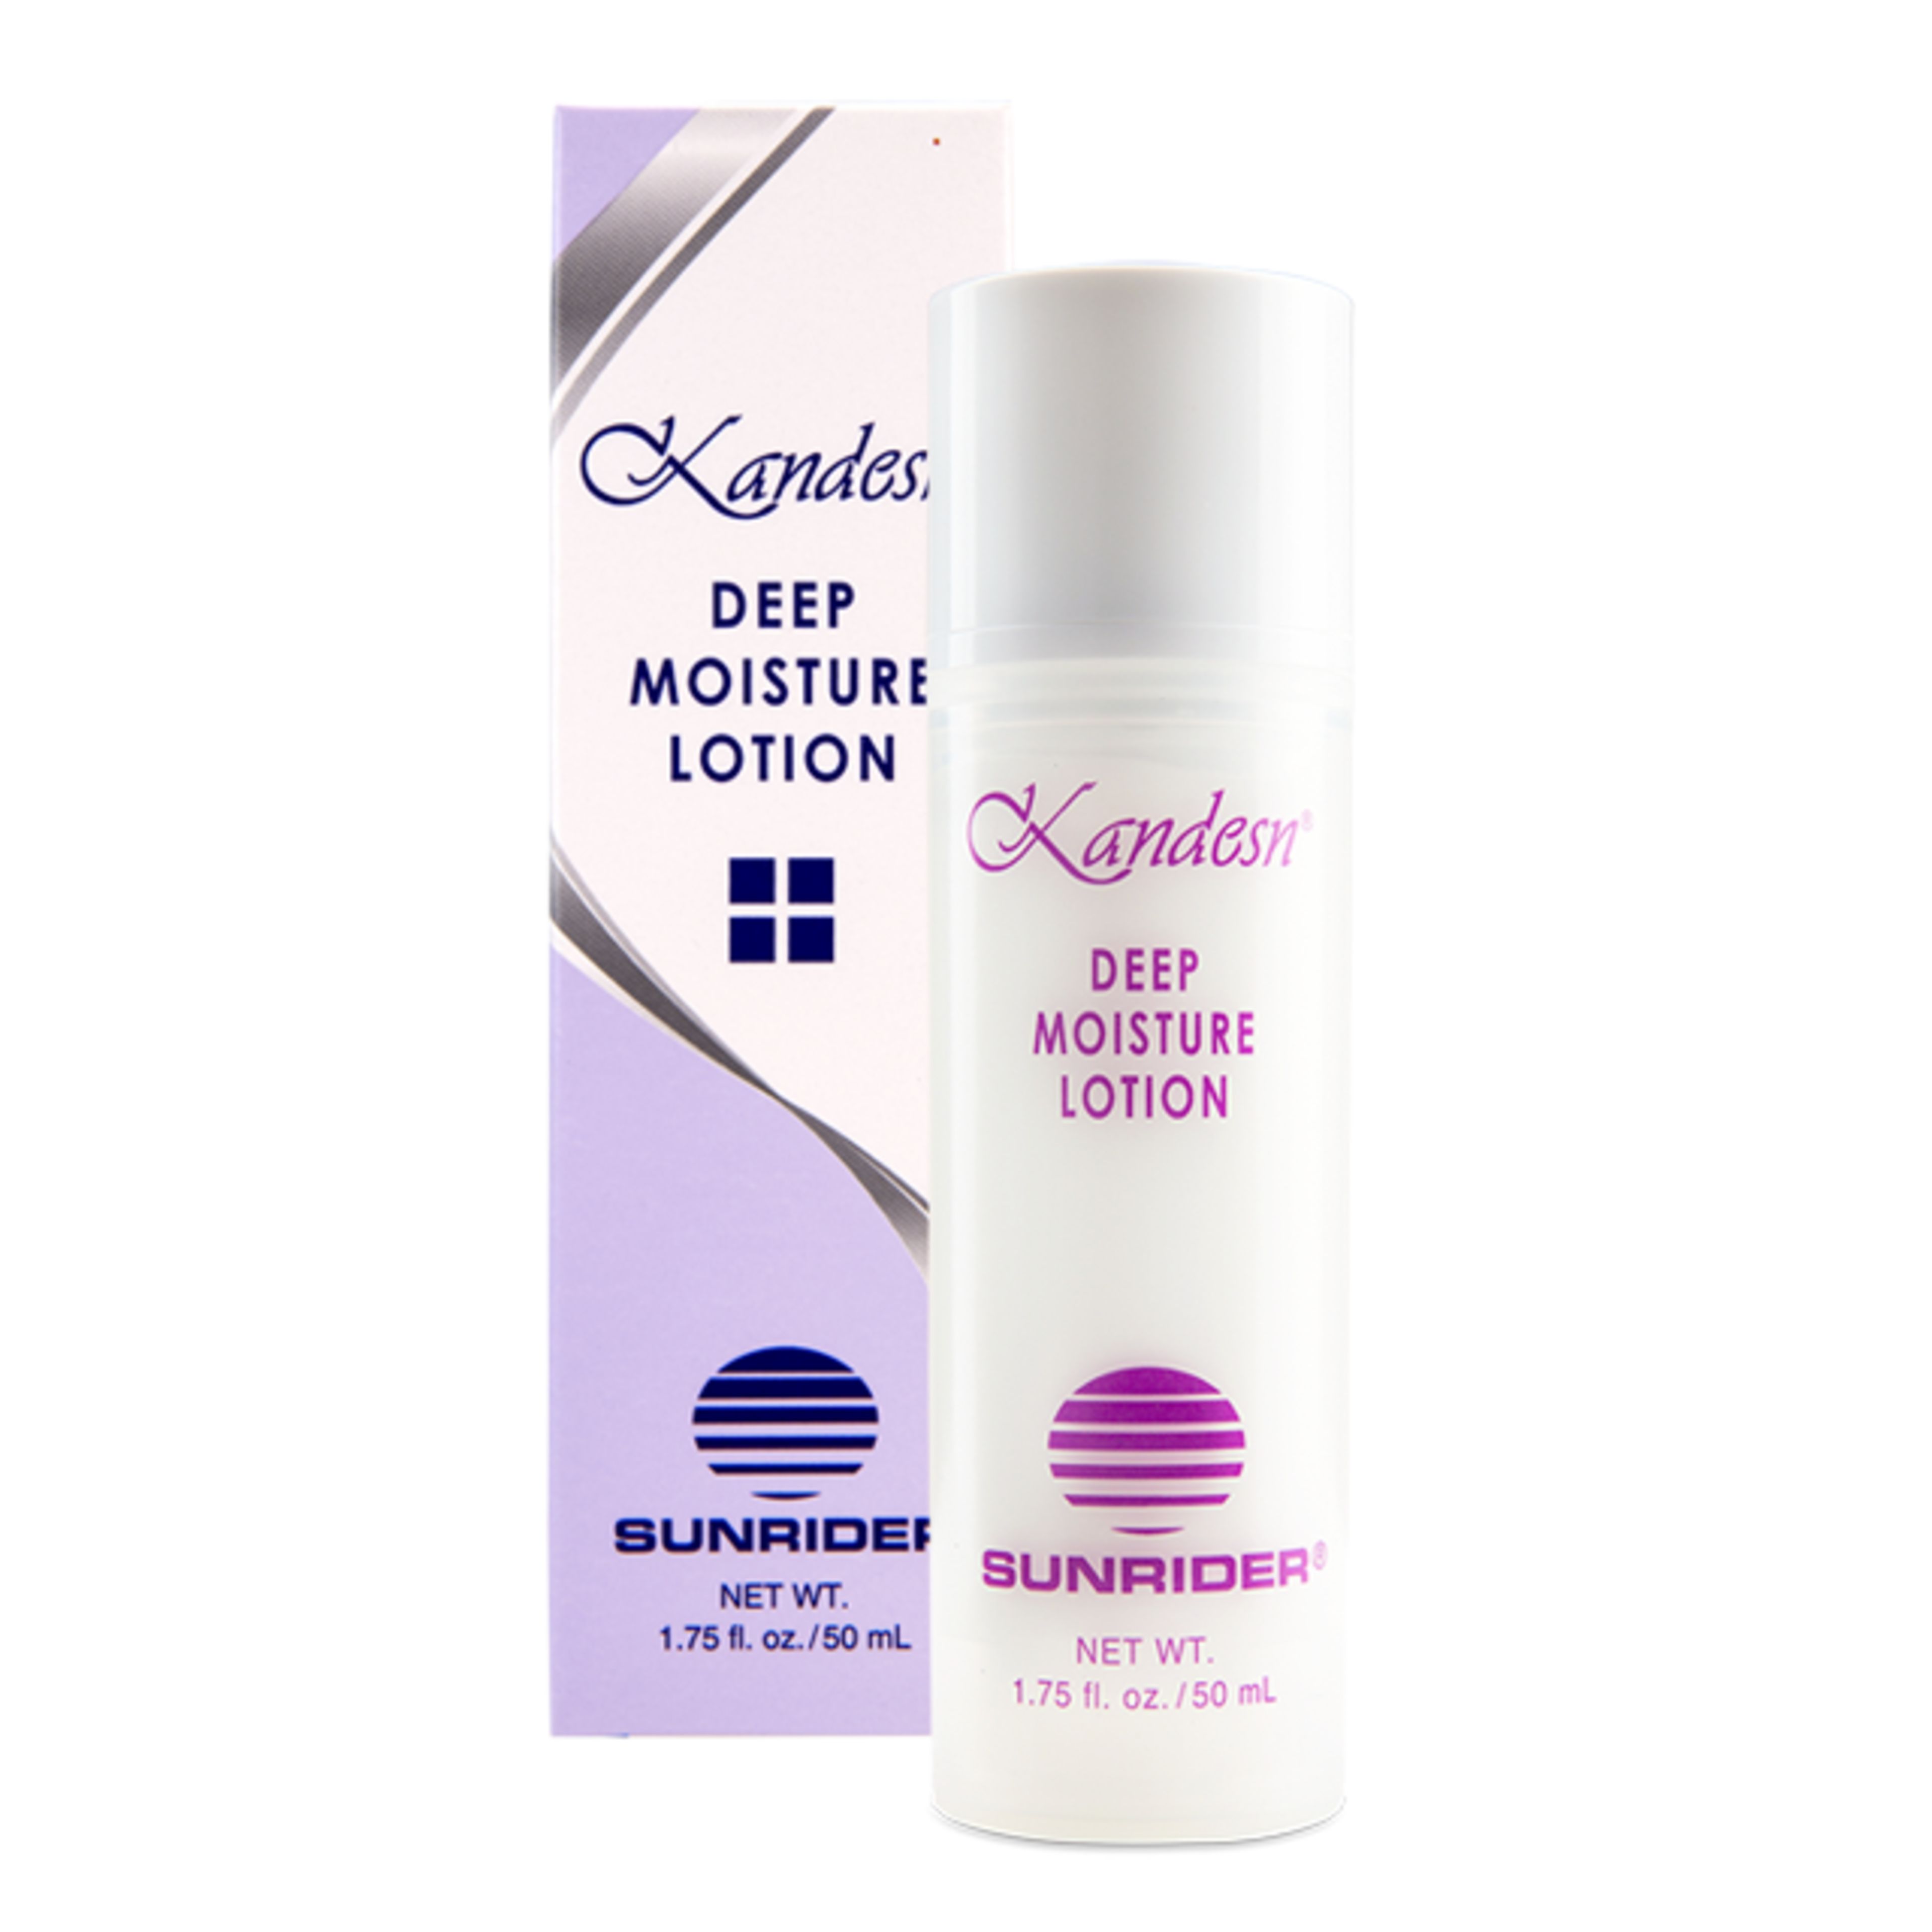 Kandesn® Deep Moisture Lotion 1.75 fl. oz. Fragrance Free